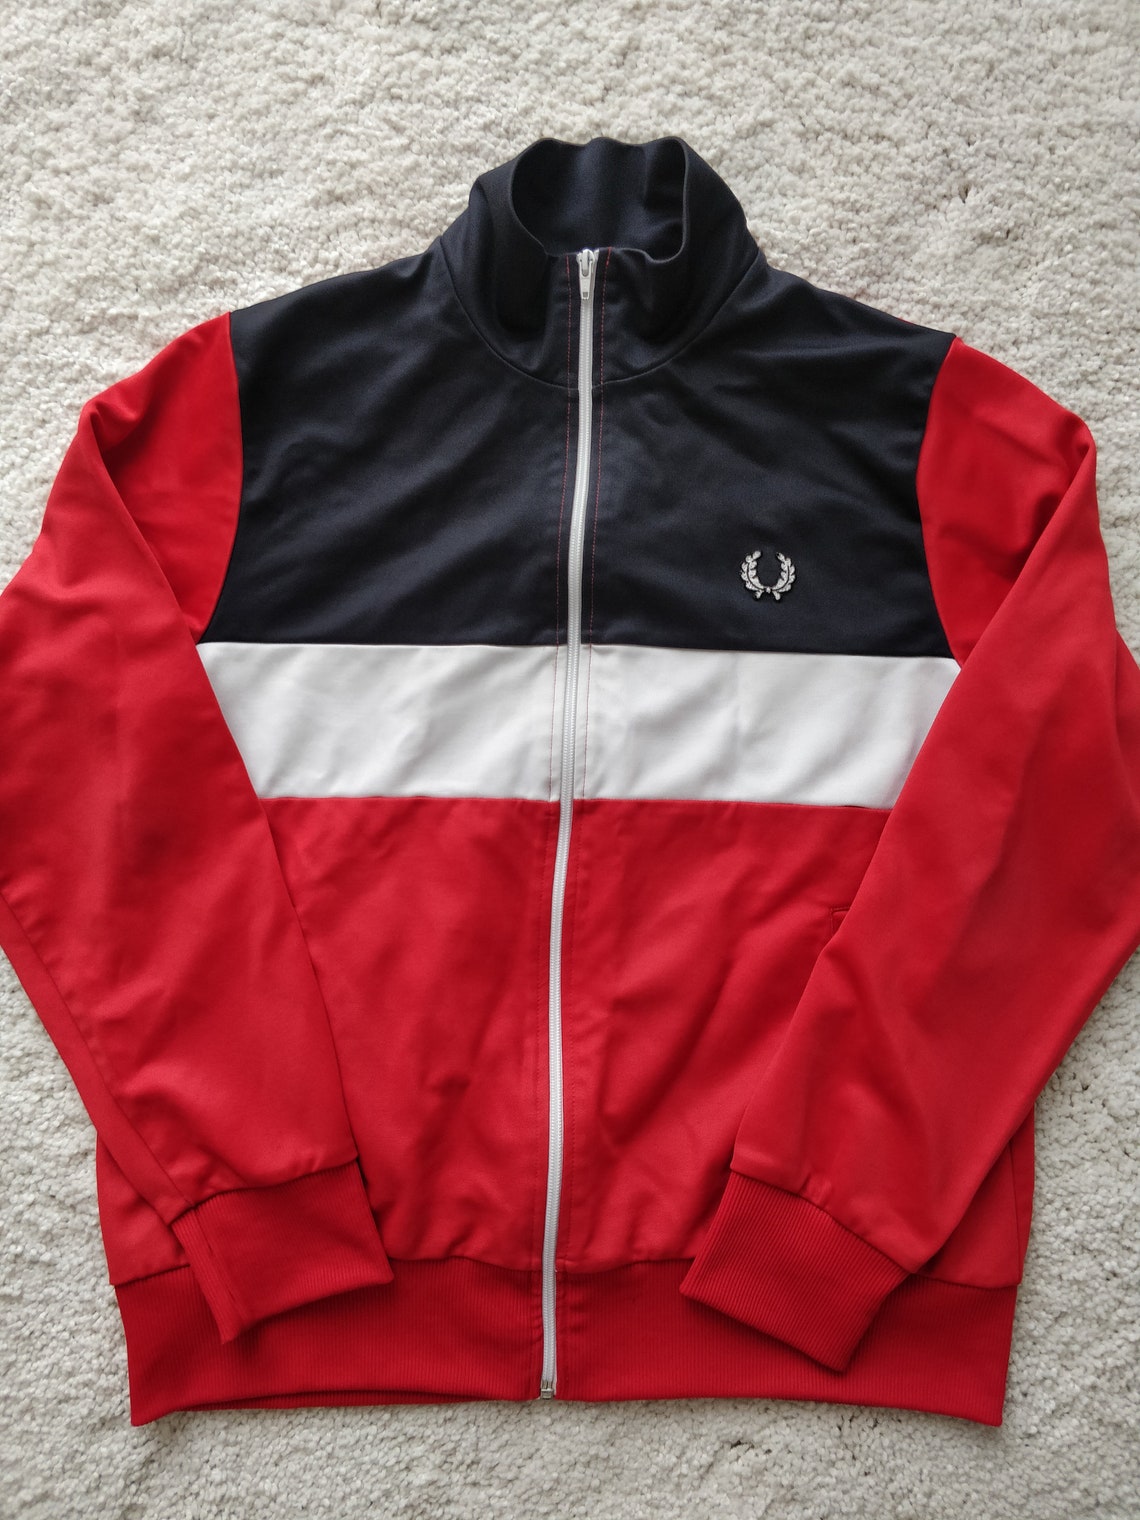 Fred Perry Vintage Mens Tracksuit Top Jacket Sweatshirt Red | Etsy